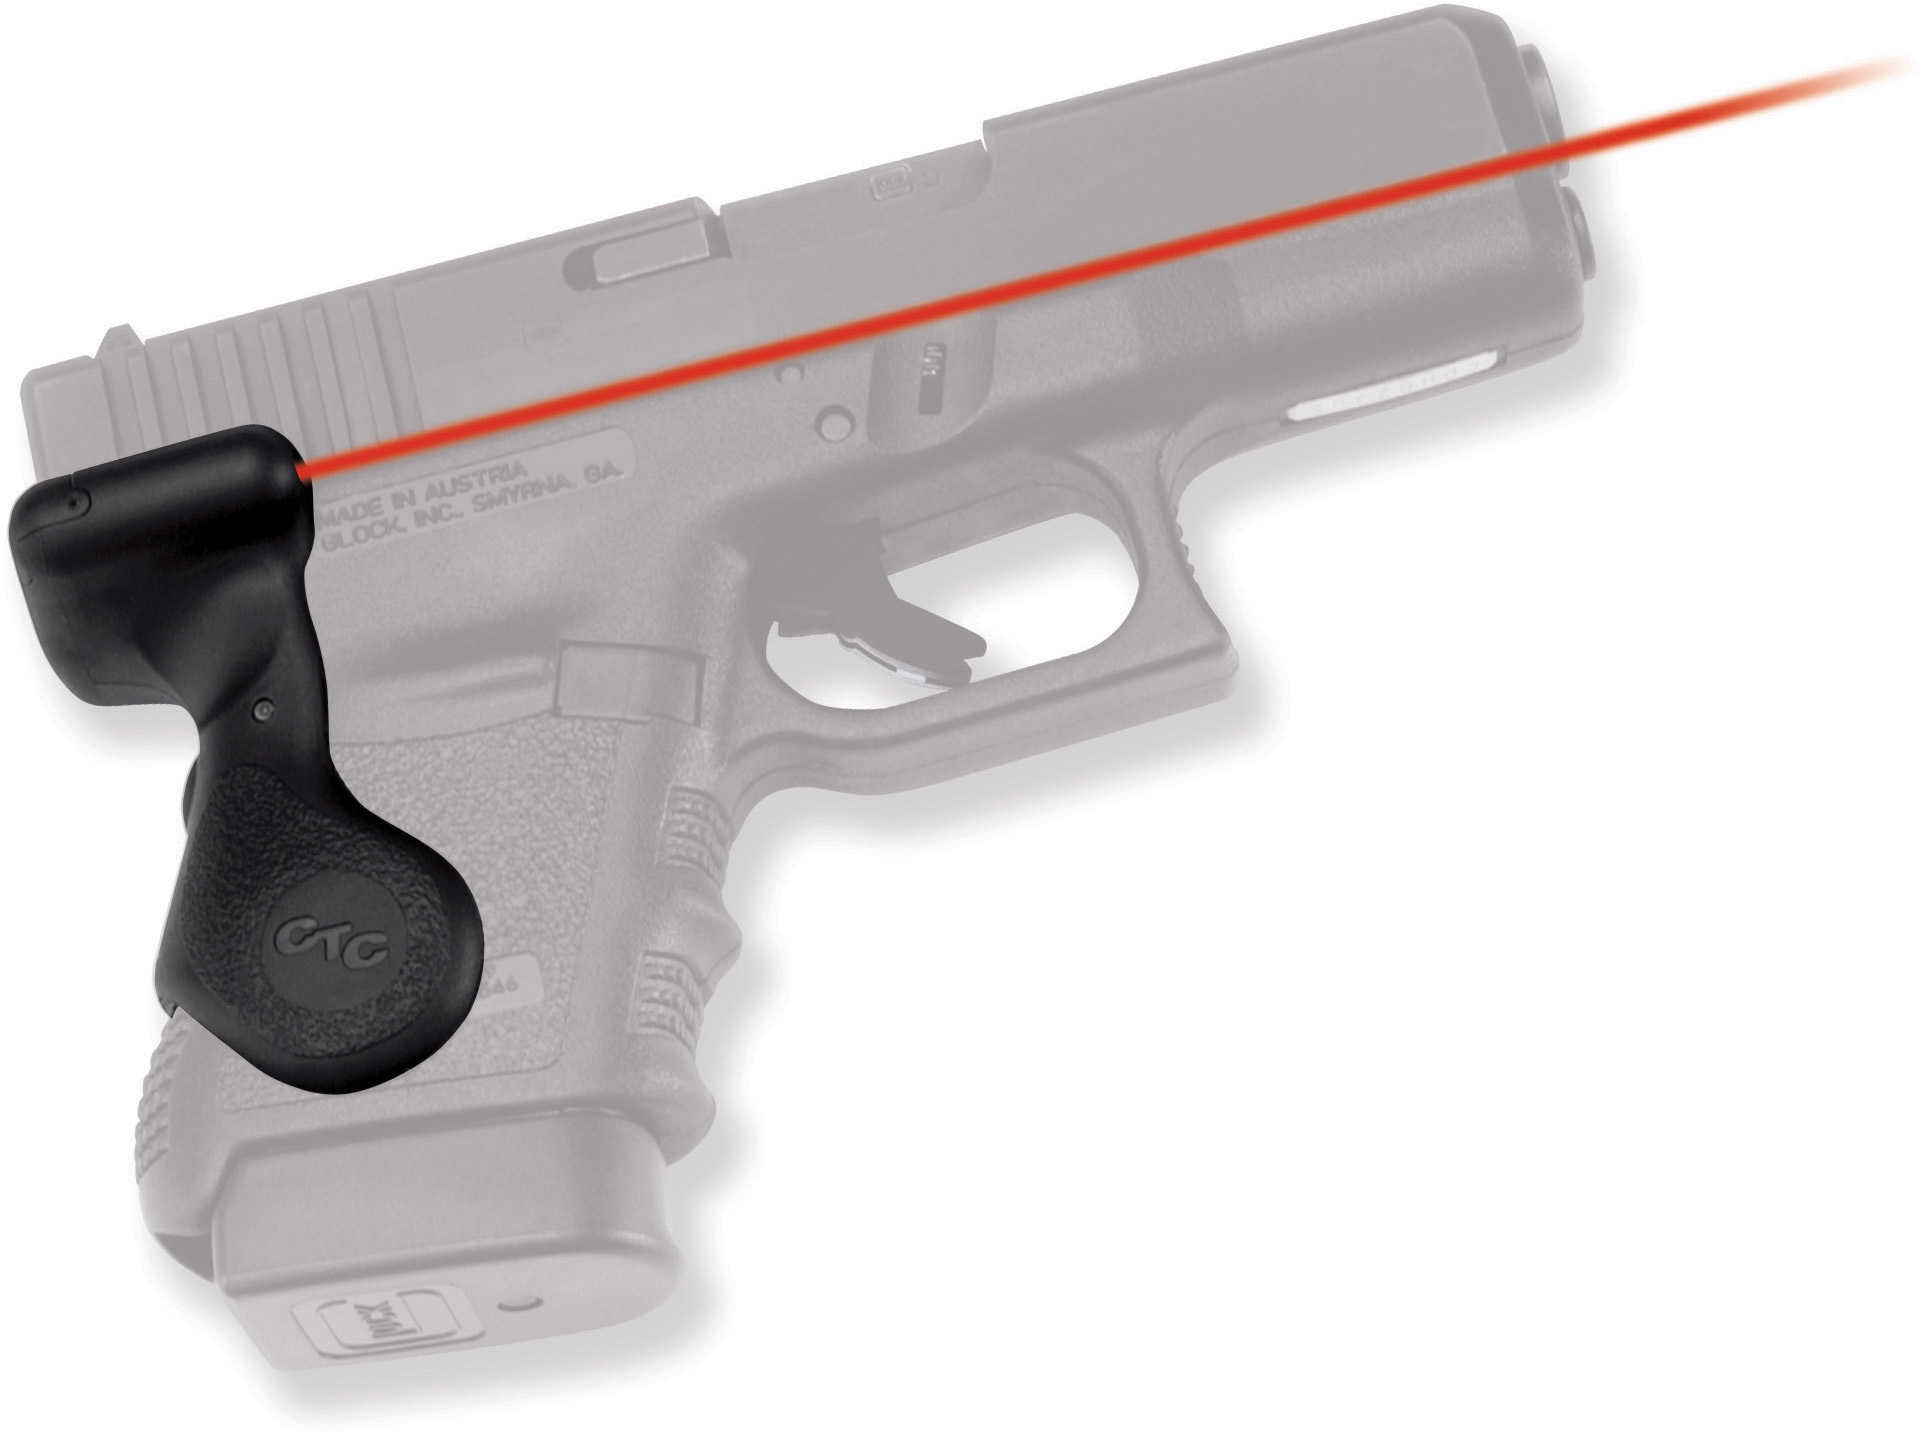 Crimson Trace Lg629 Lasergrips Red Fits Glock 2930 Grip Black